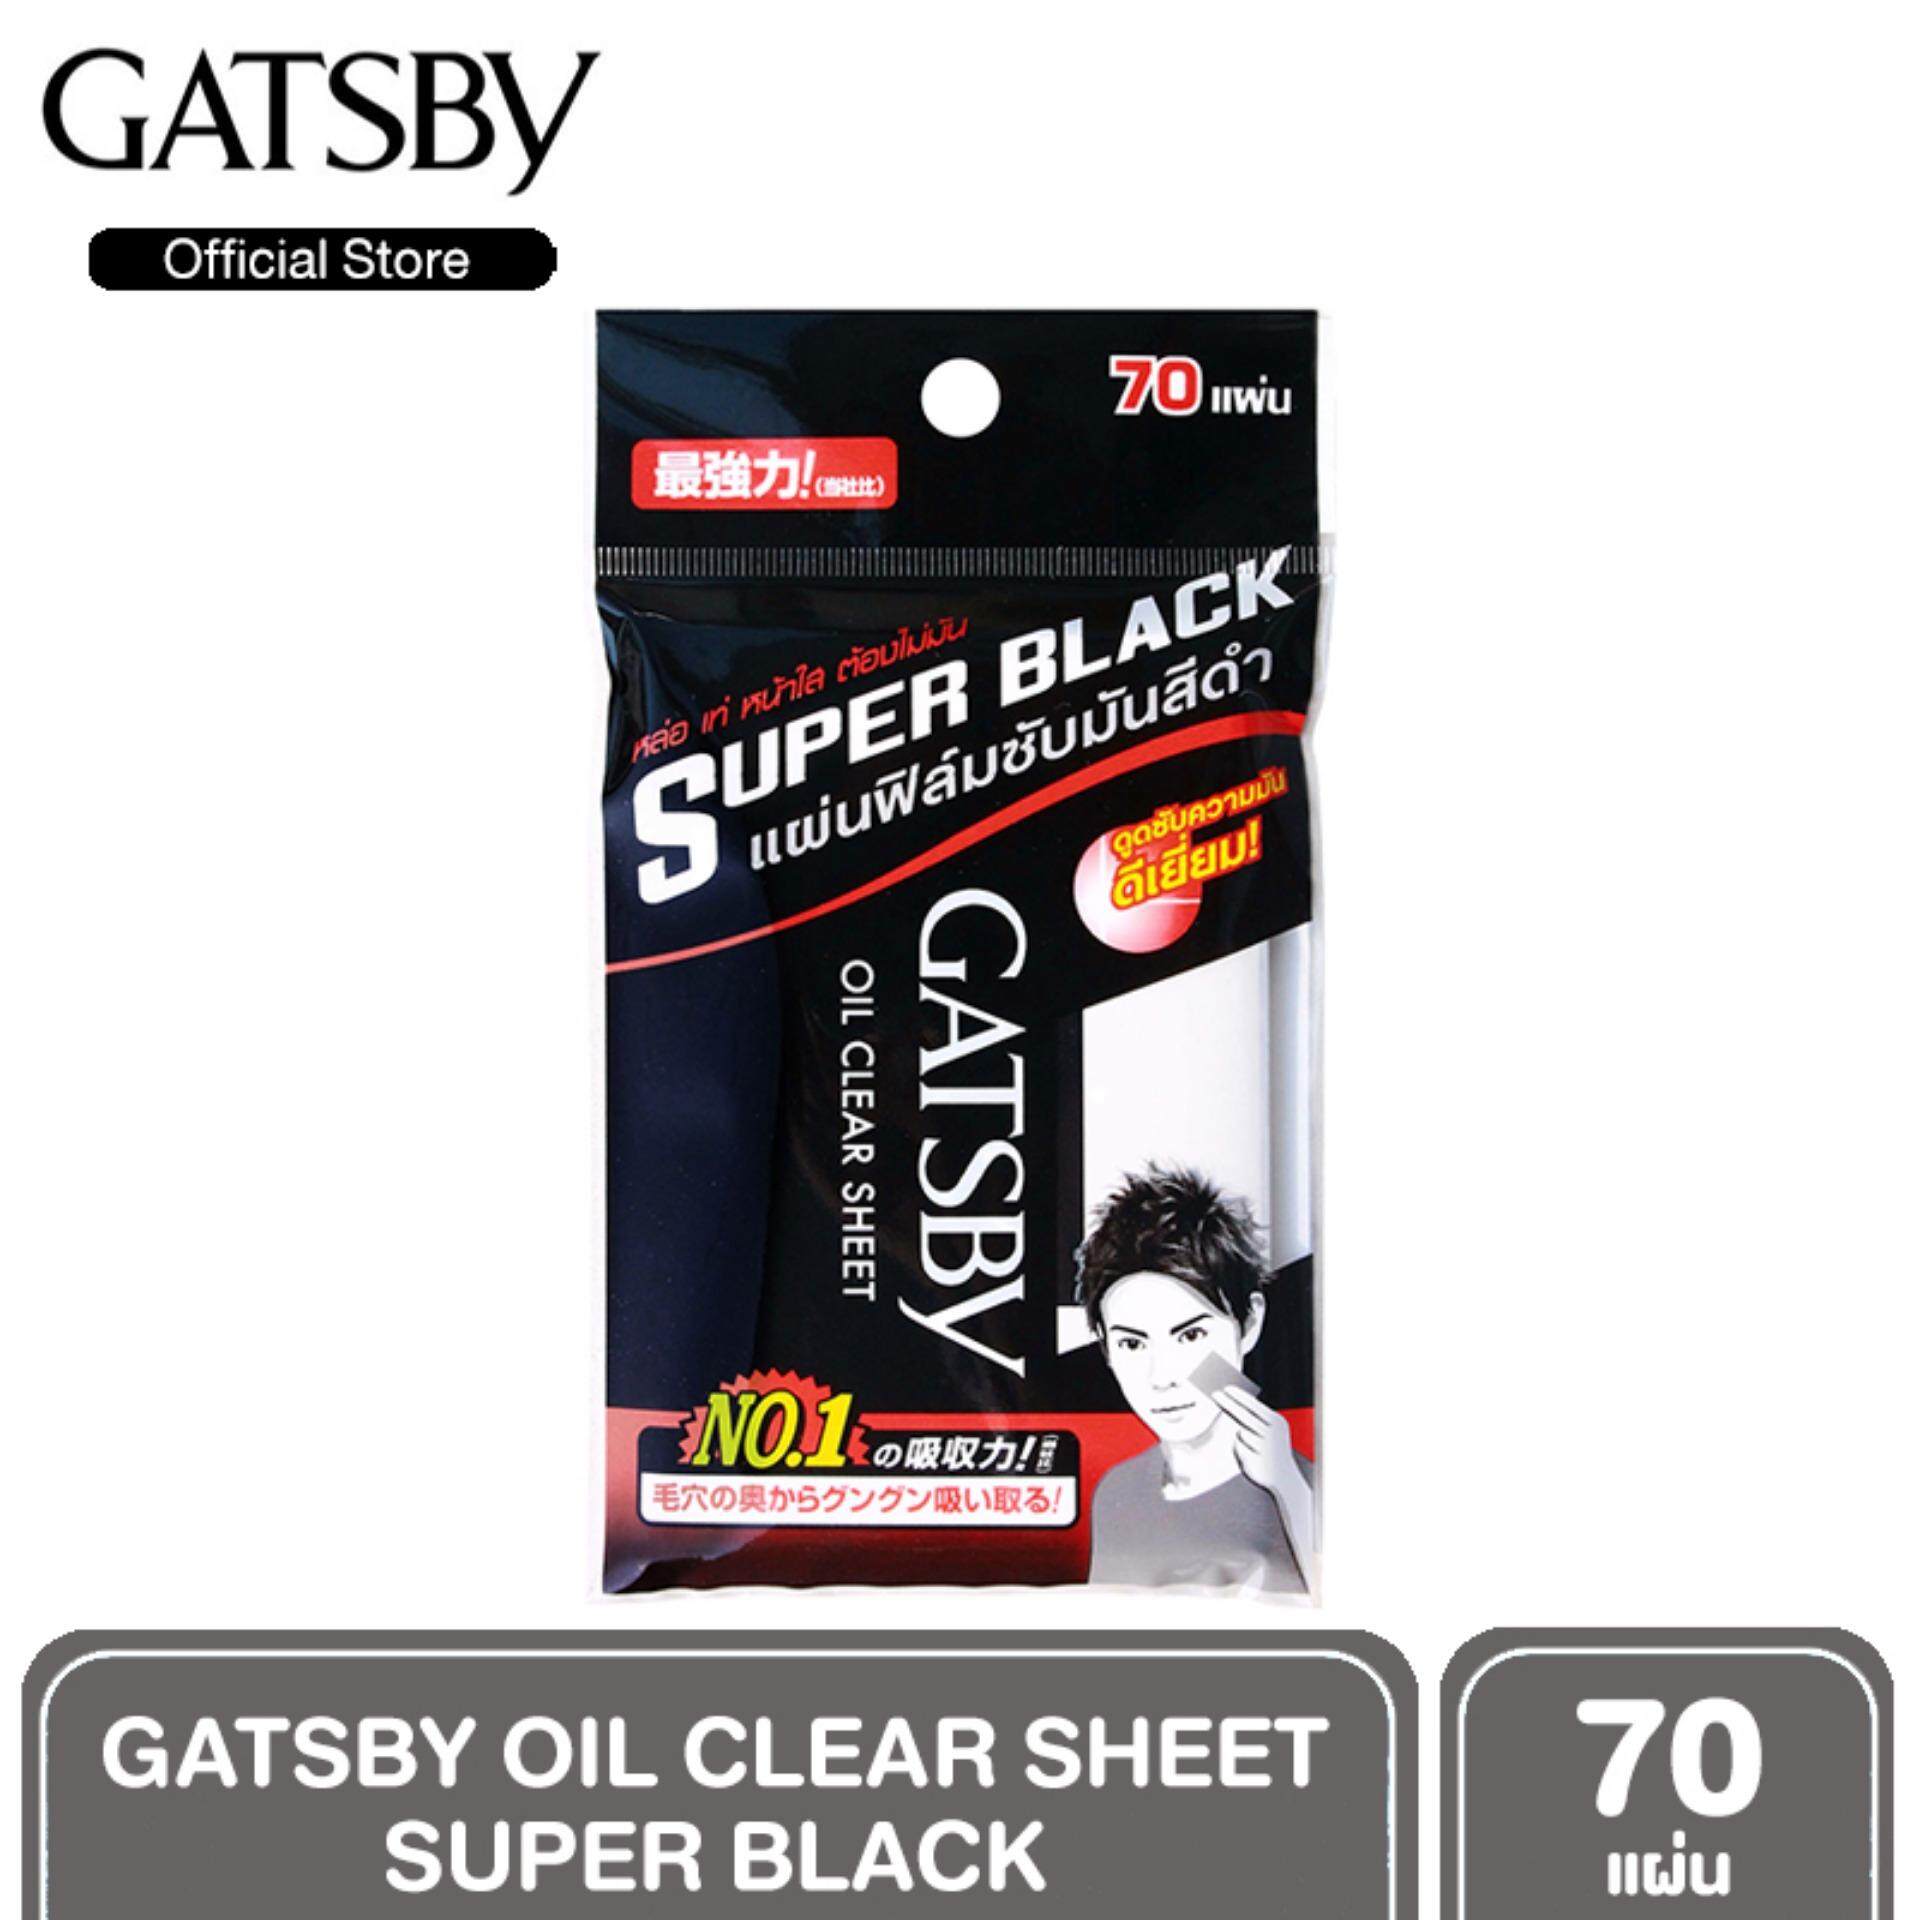 Gatsby Oil Clear Sheet Super Black แกสบี้ ออยล์ เคลียร์ ชีท แผ่นฟิล์มซับมันสีดำ 70 แผ่น ฟิล์มซับความมัน ฟิล์มซับหน้า กระดาษซับหน้า กระดาษซับมัน Gatsby. 